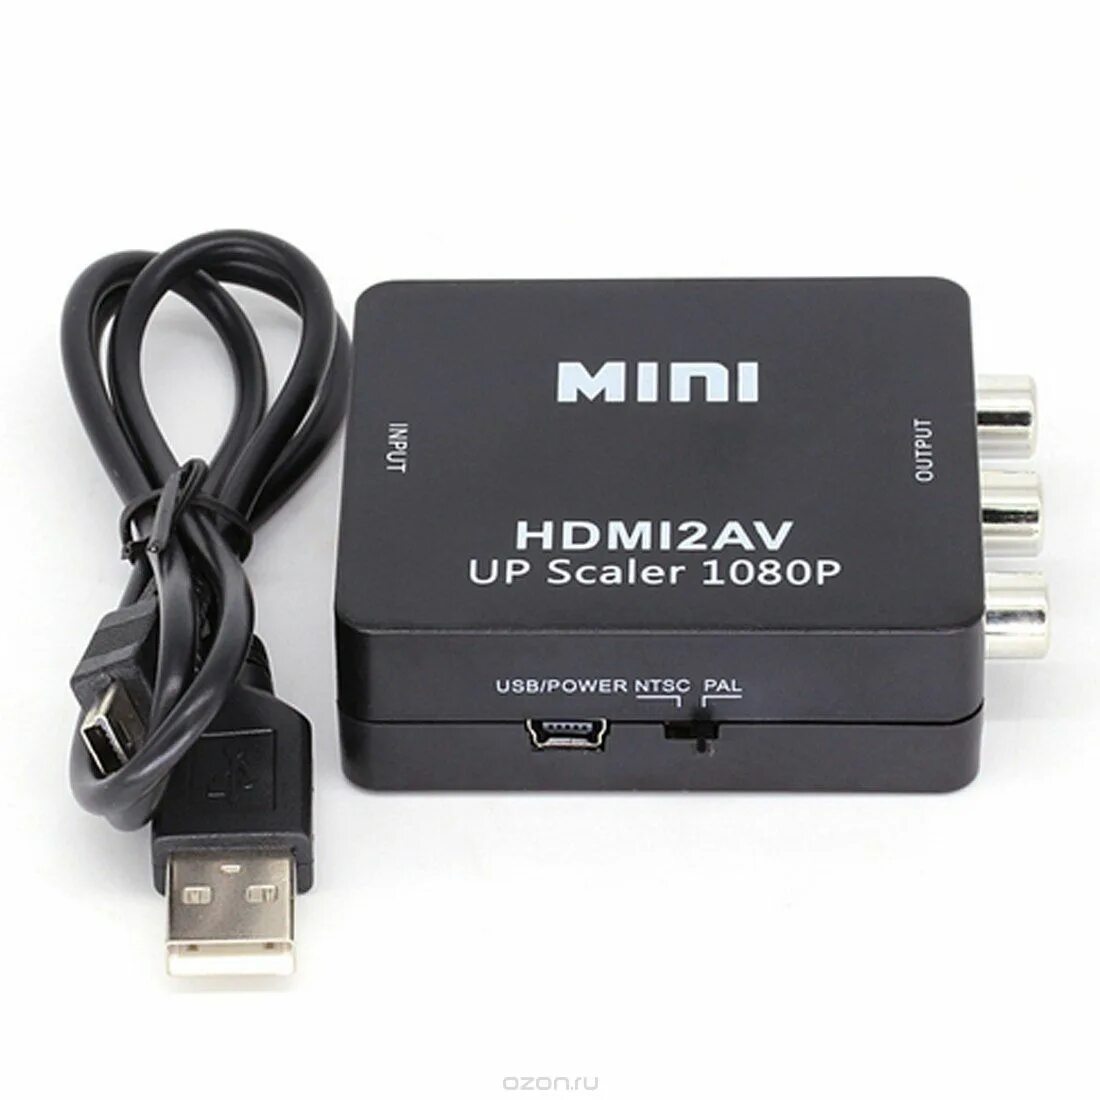 Av 02. Переходник Mini VGA 2 HDMI CVBS. Видео конвертер Mini av2hdmi. Адаптер hdmi2av Mini. Mini HDMI 2av переходник.